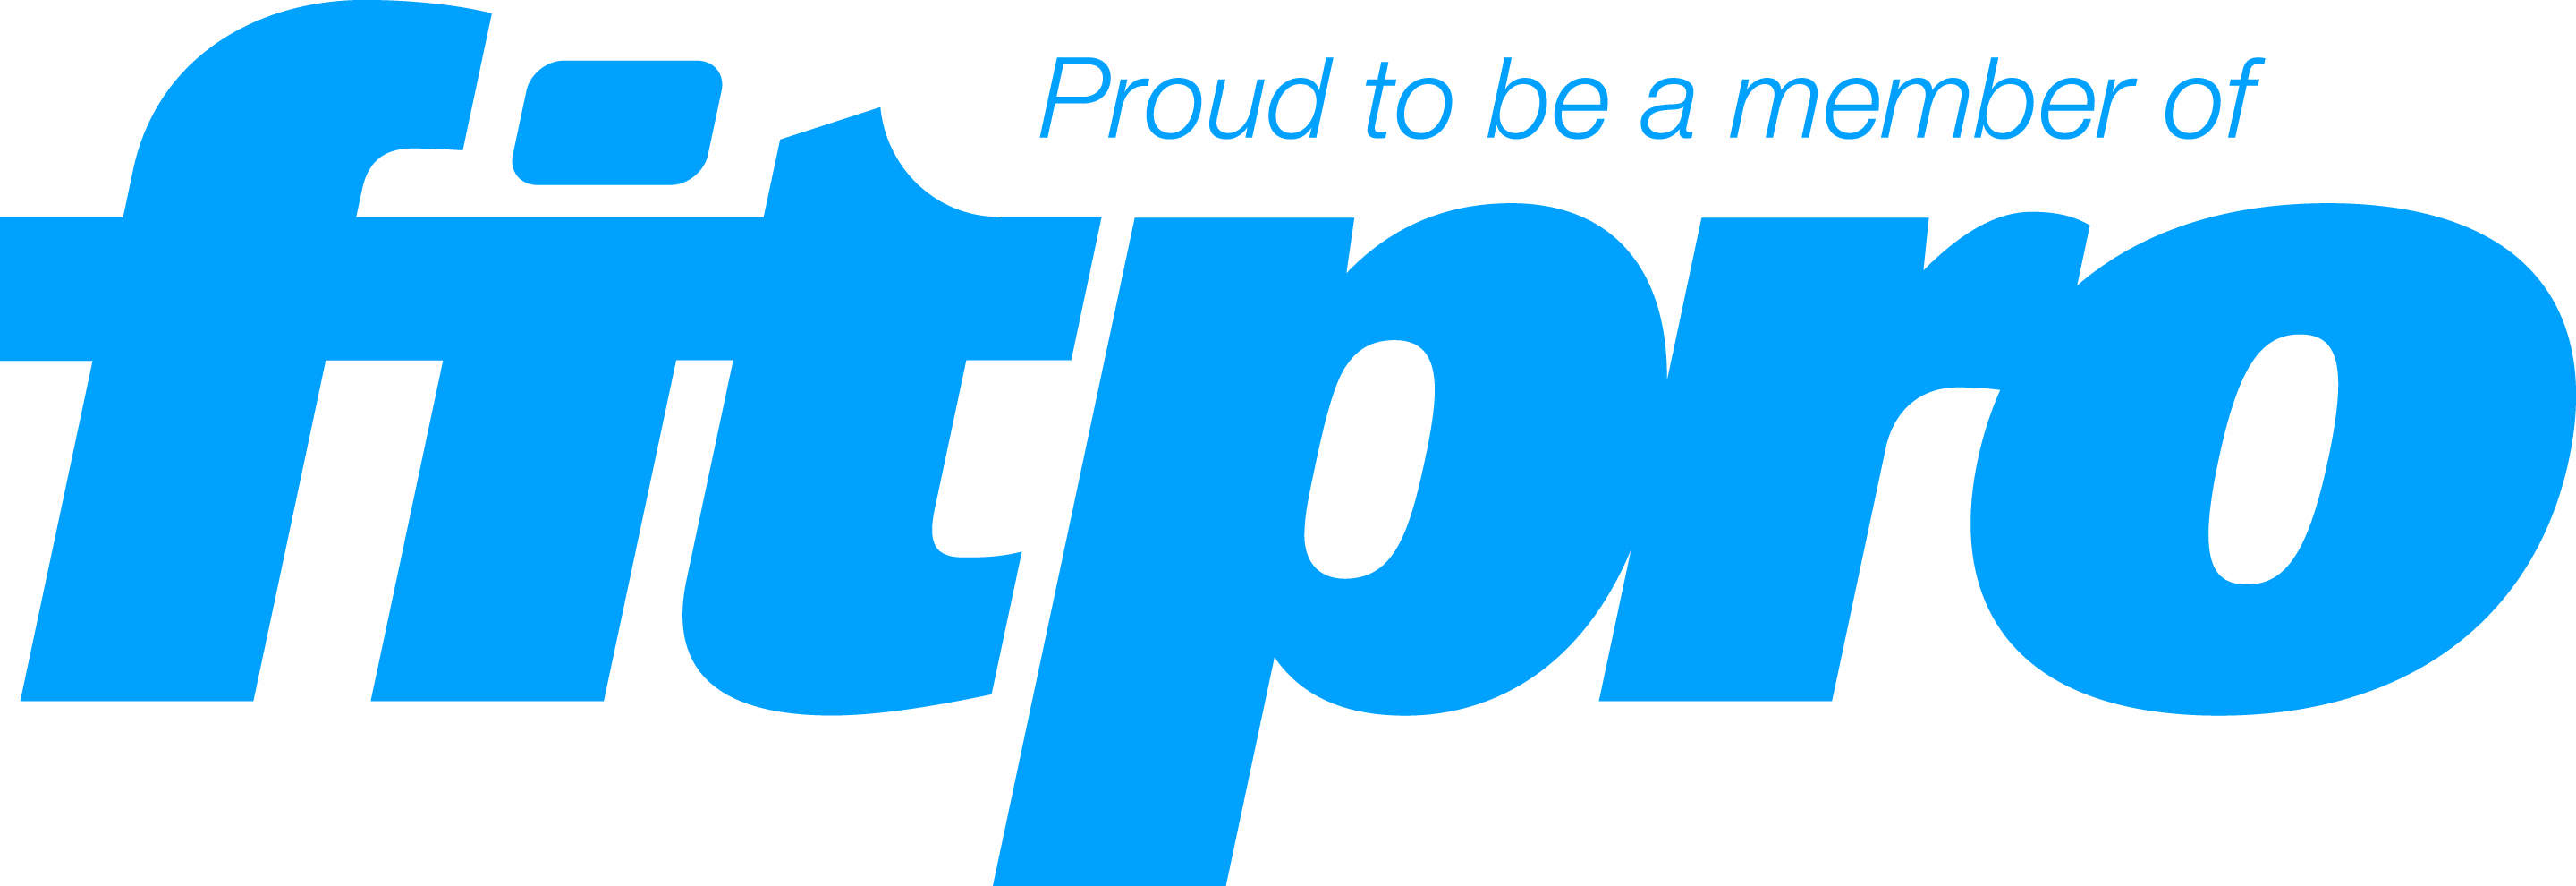 member of FitPro since 1991